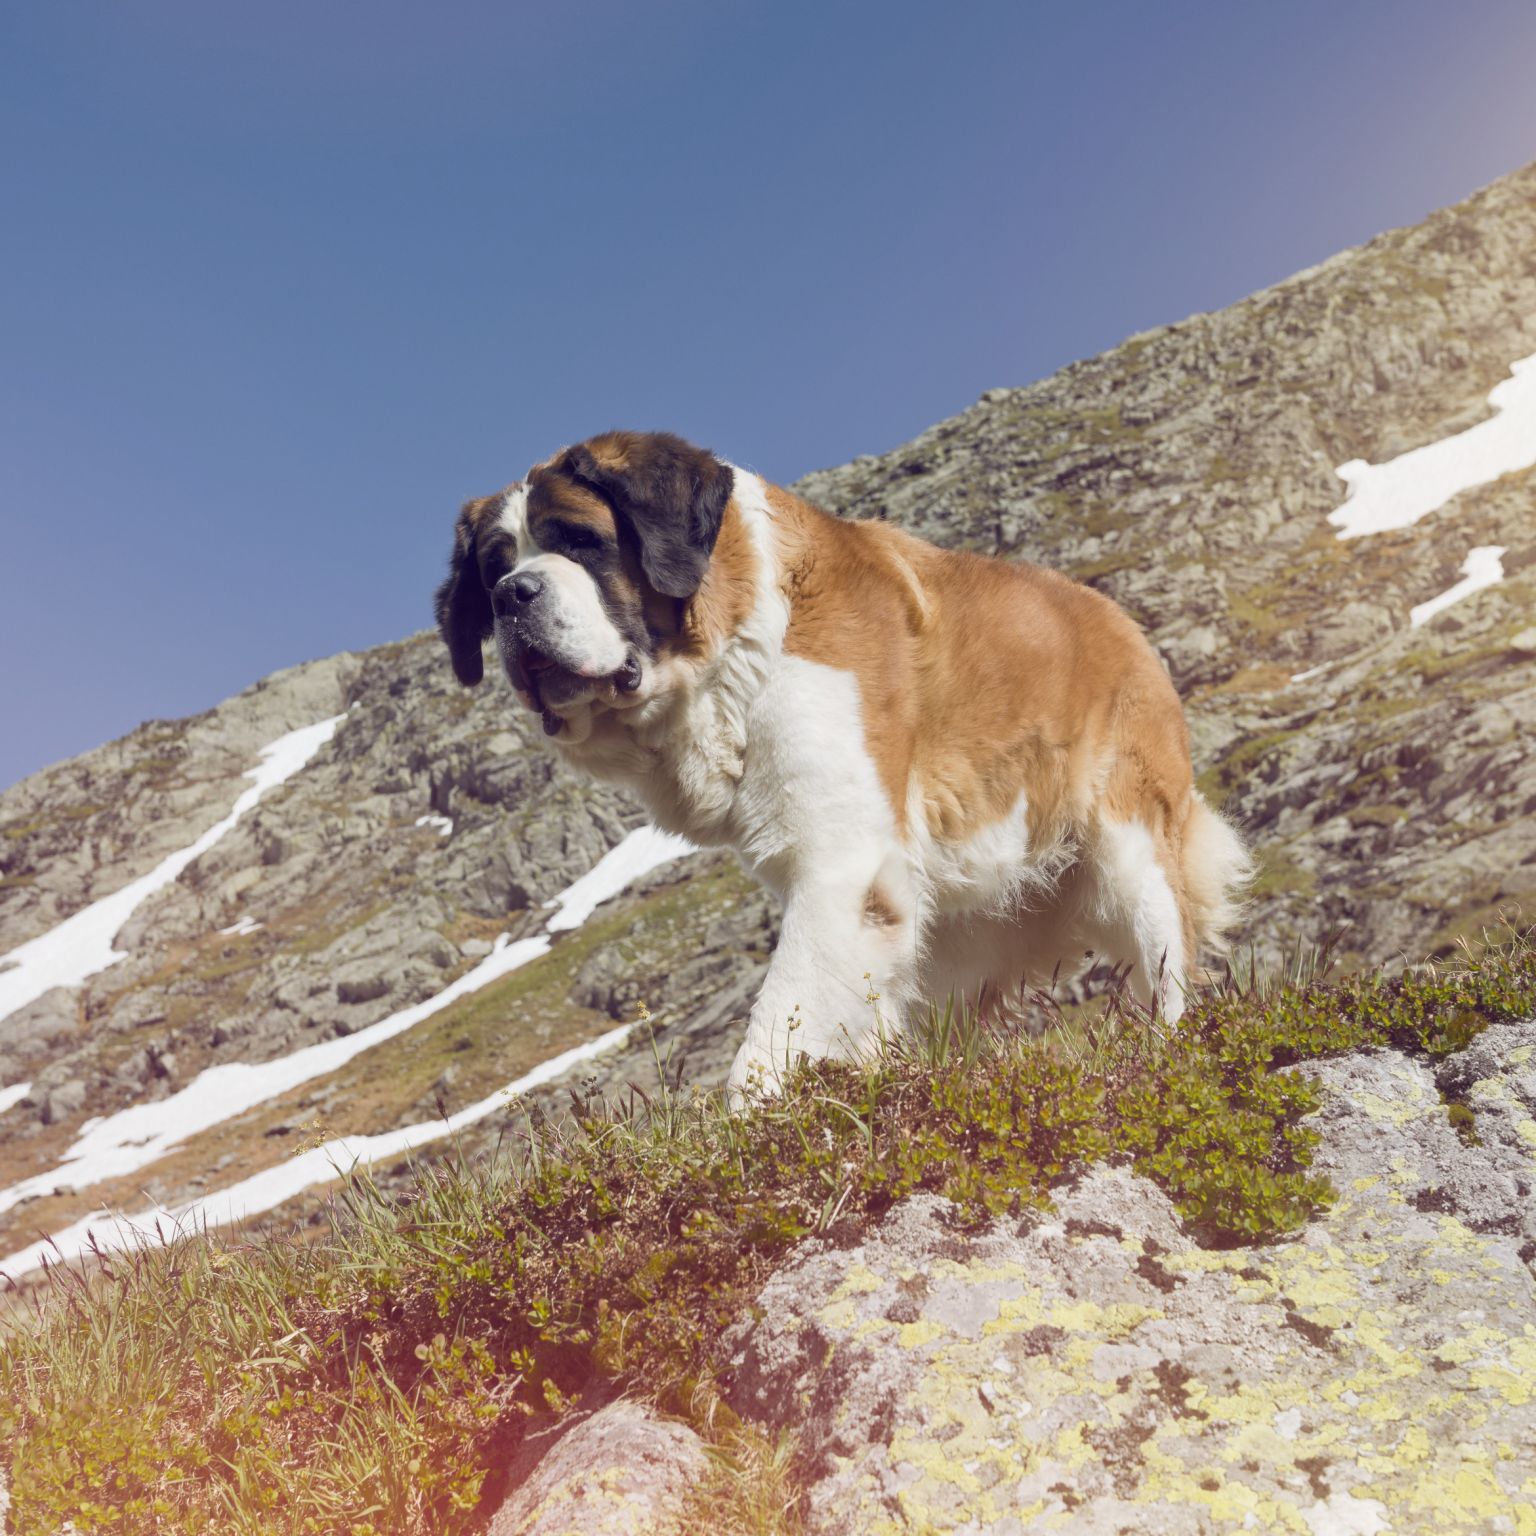 St-Bernard dogs in Valais. Switzerland.